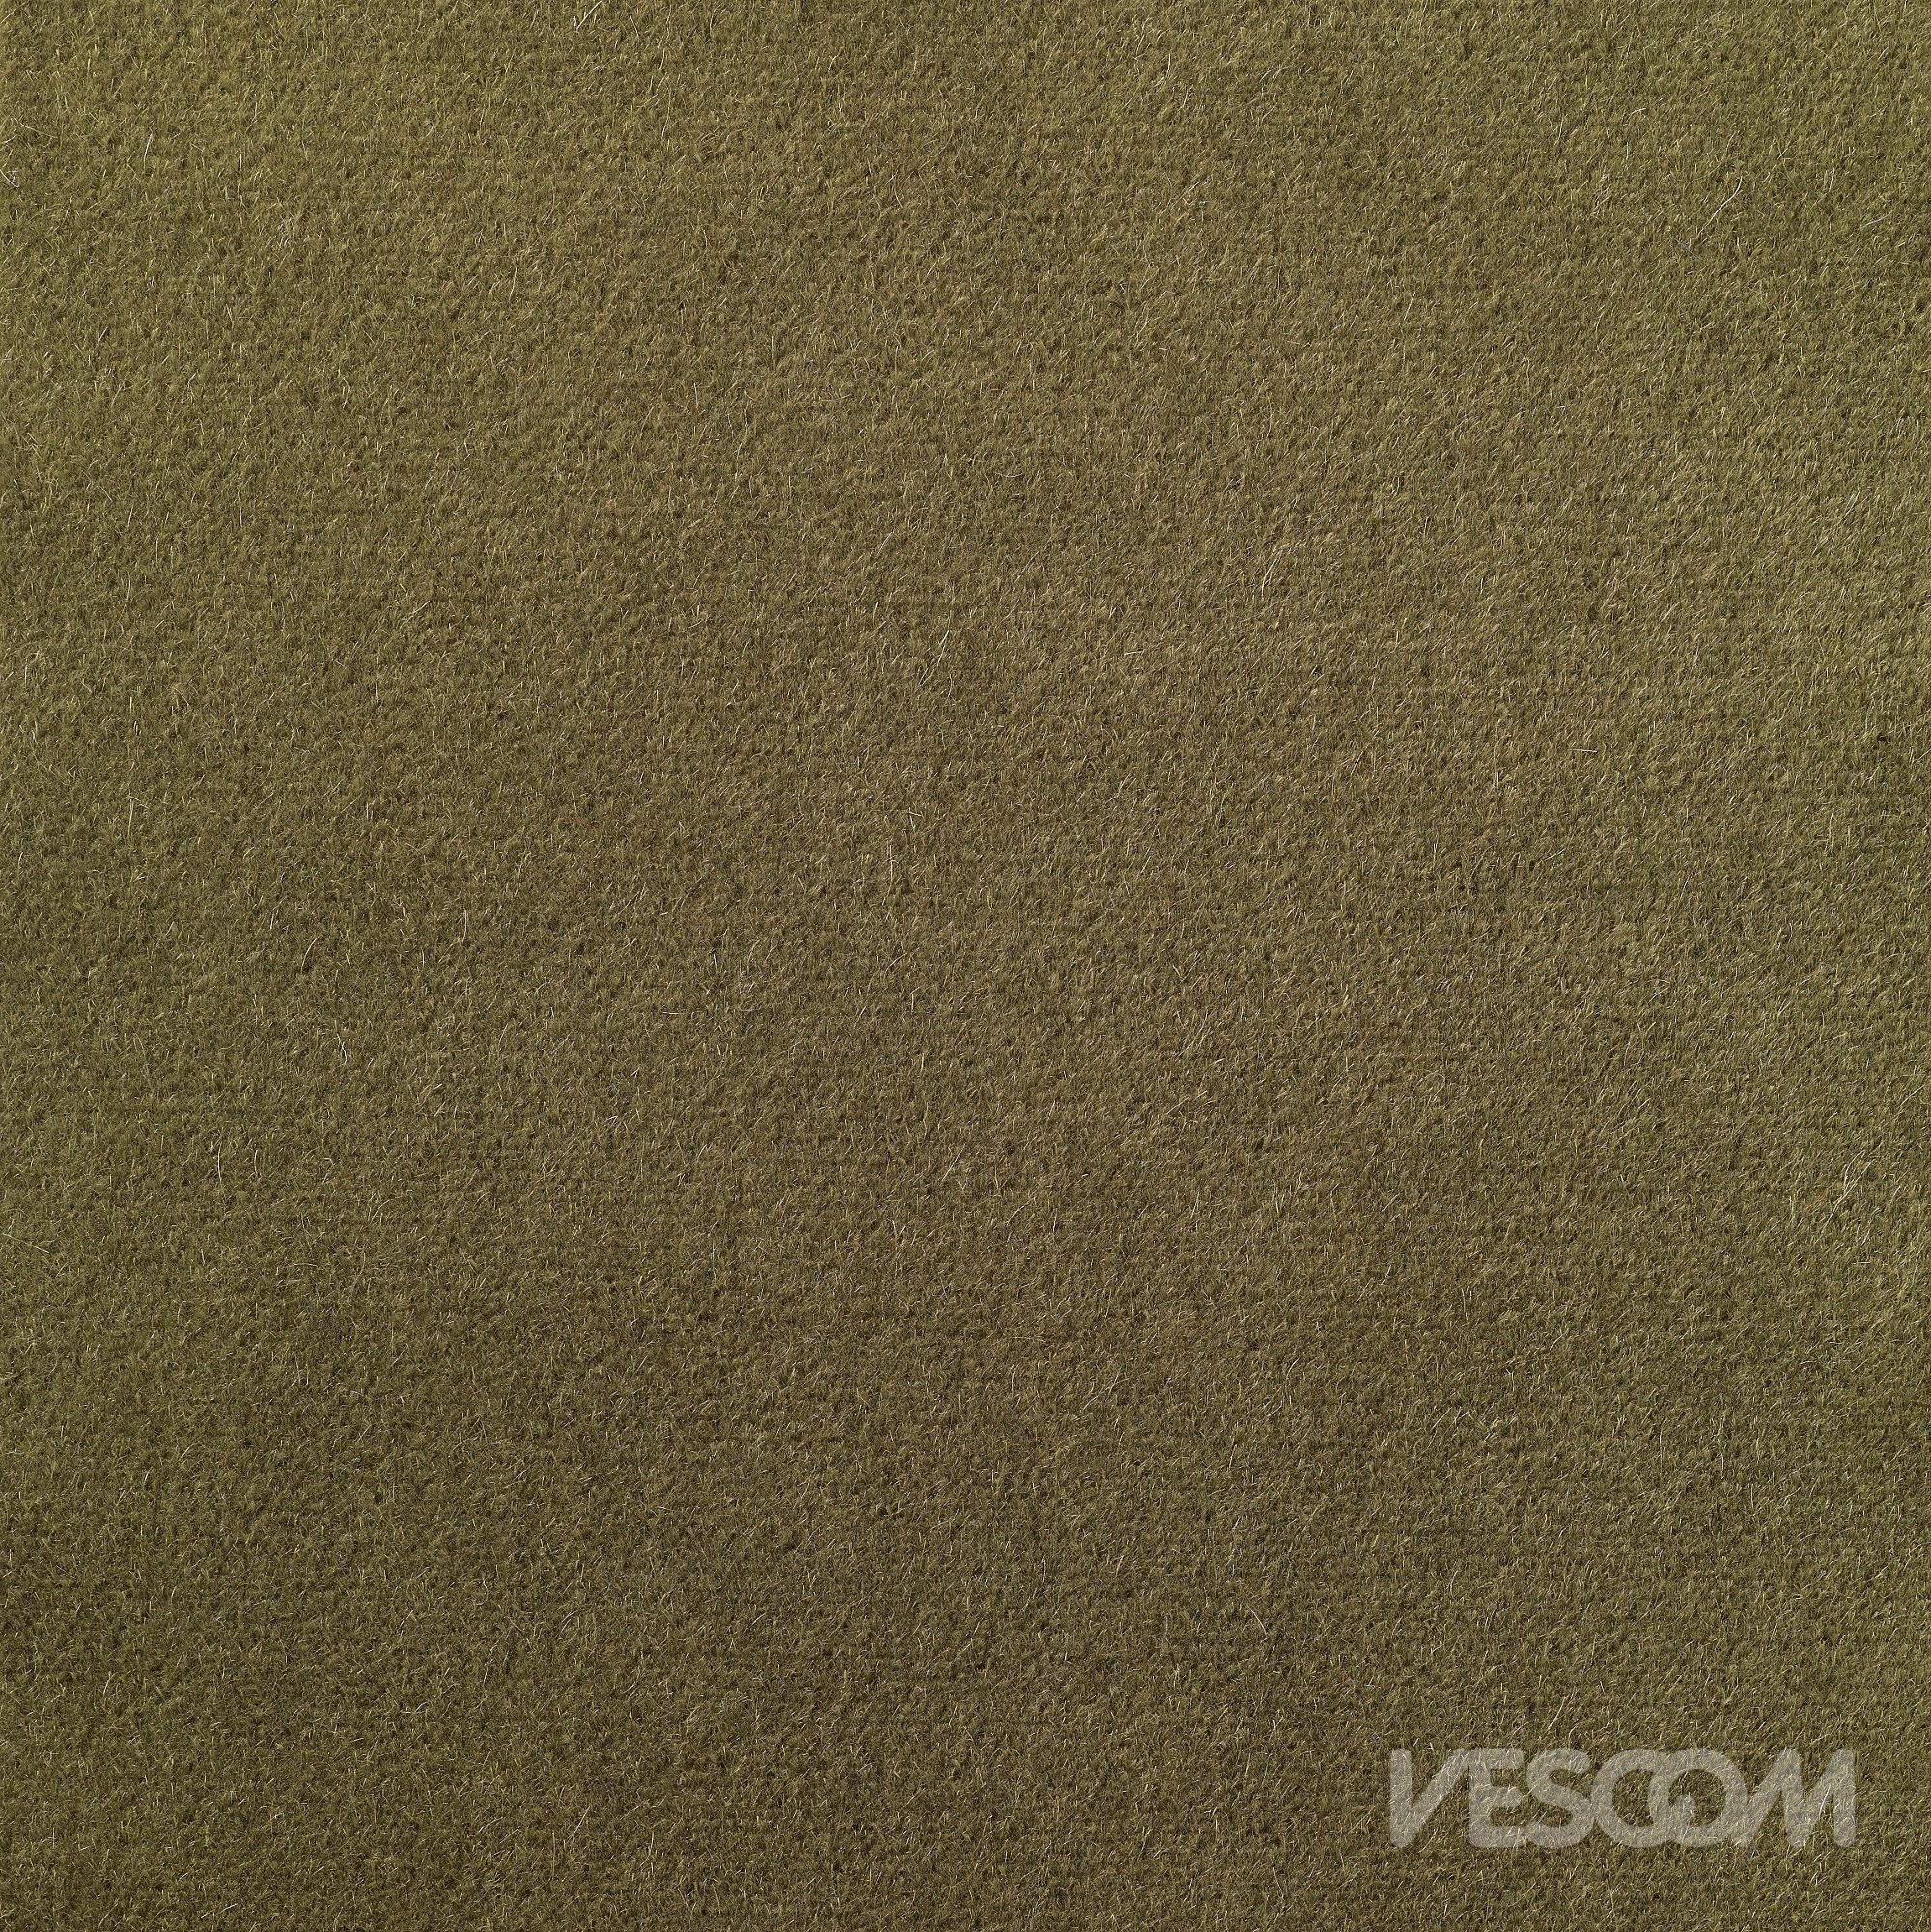 Vescom Ariana Upholstery Fabric 7061.13